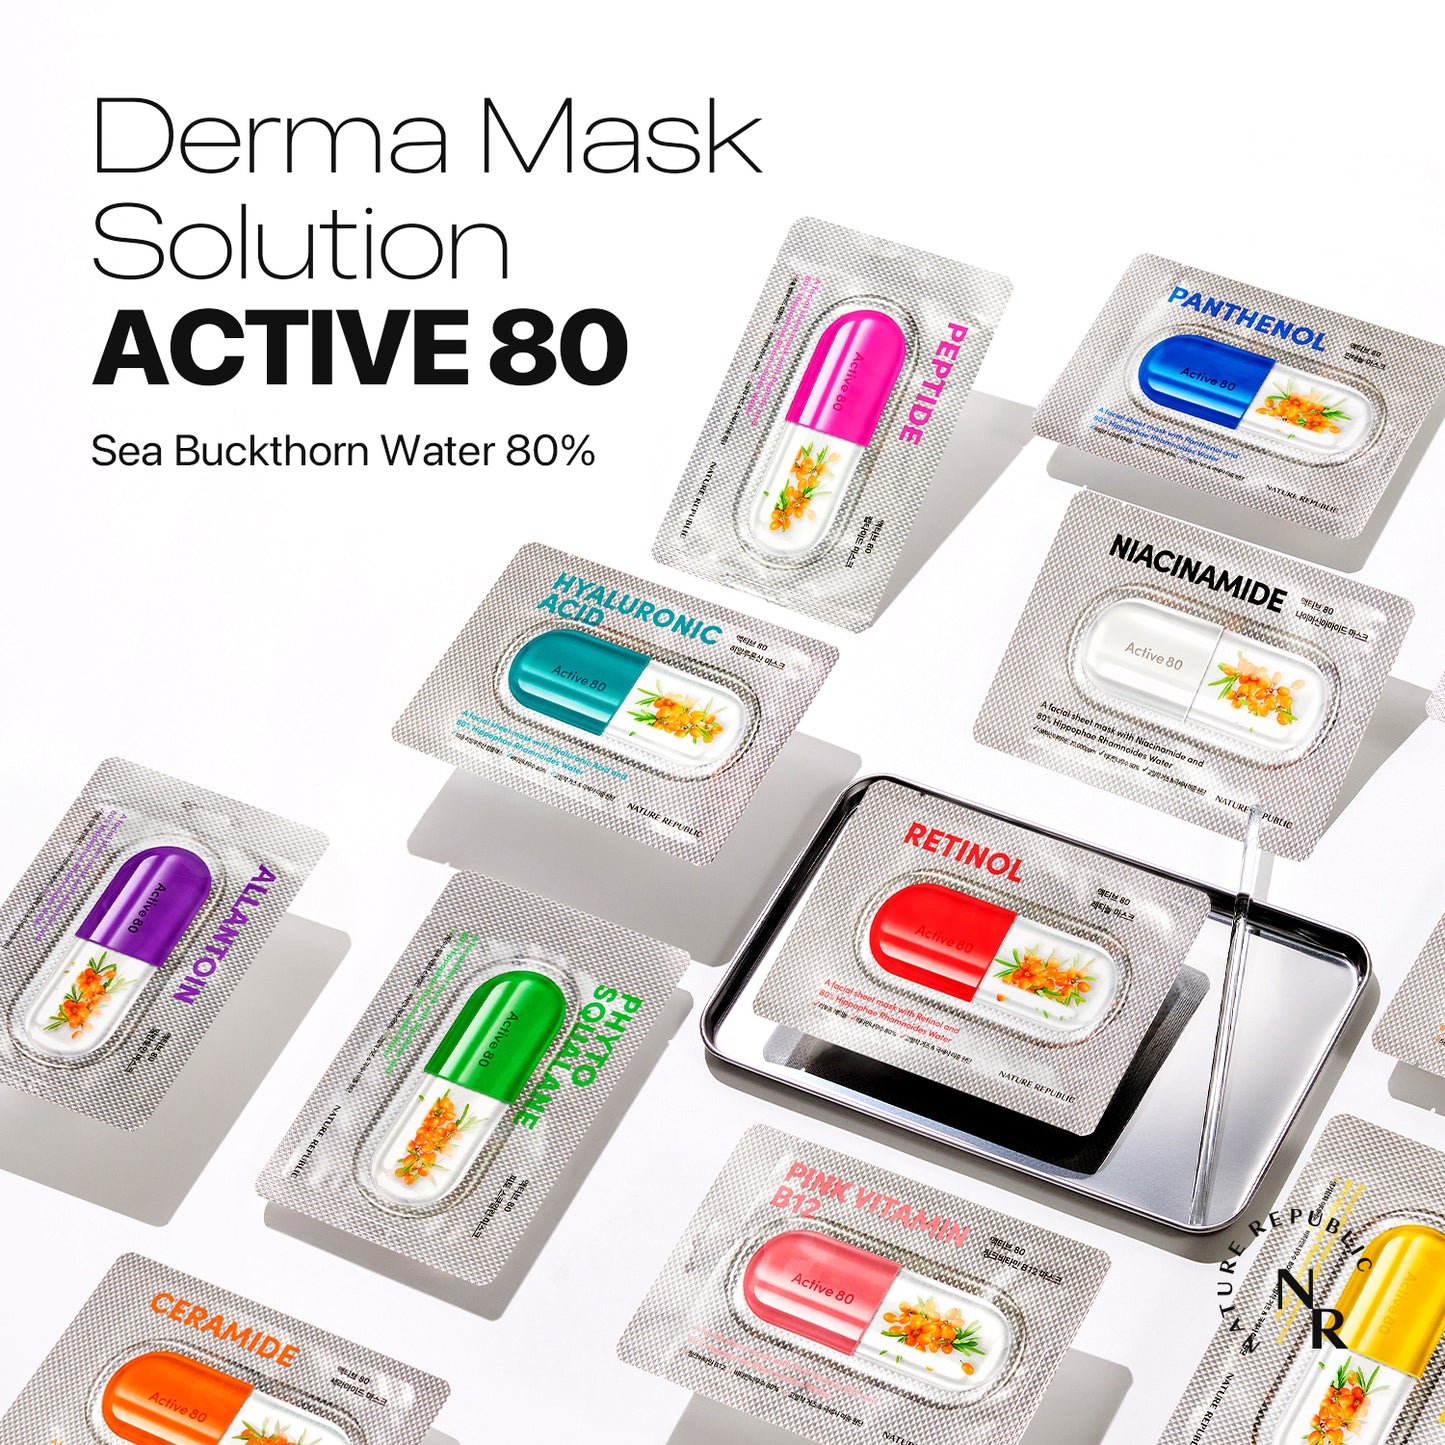 ACTIVE 80 Peptide Mask